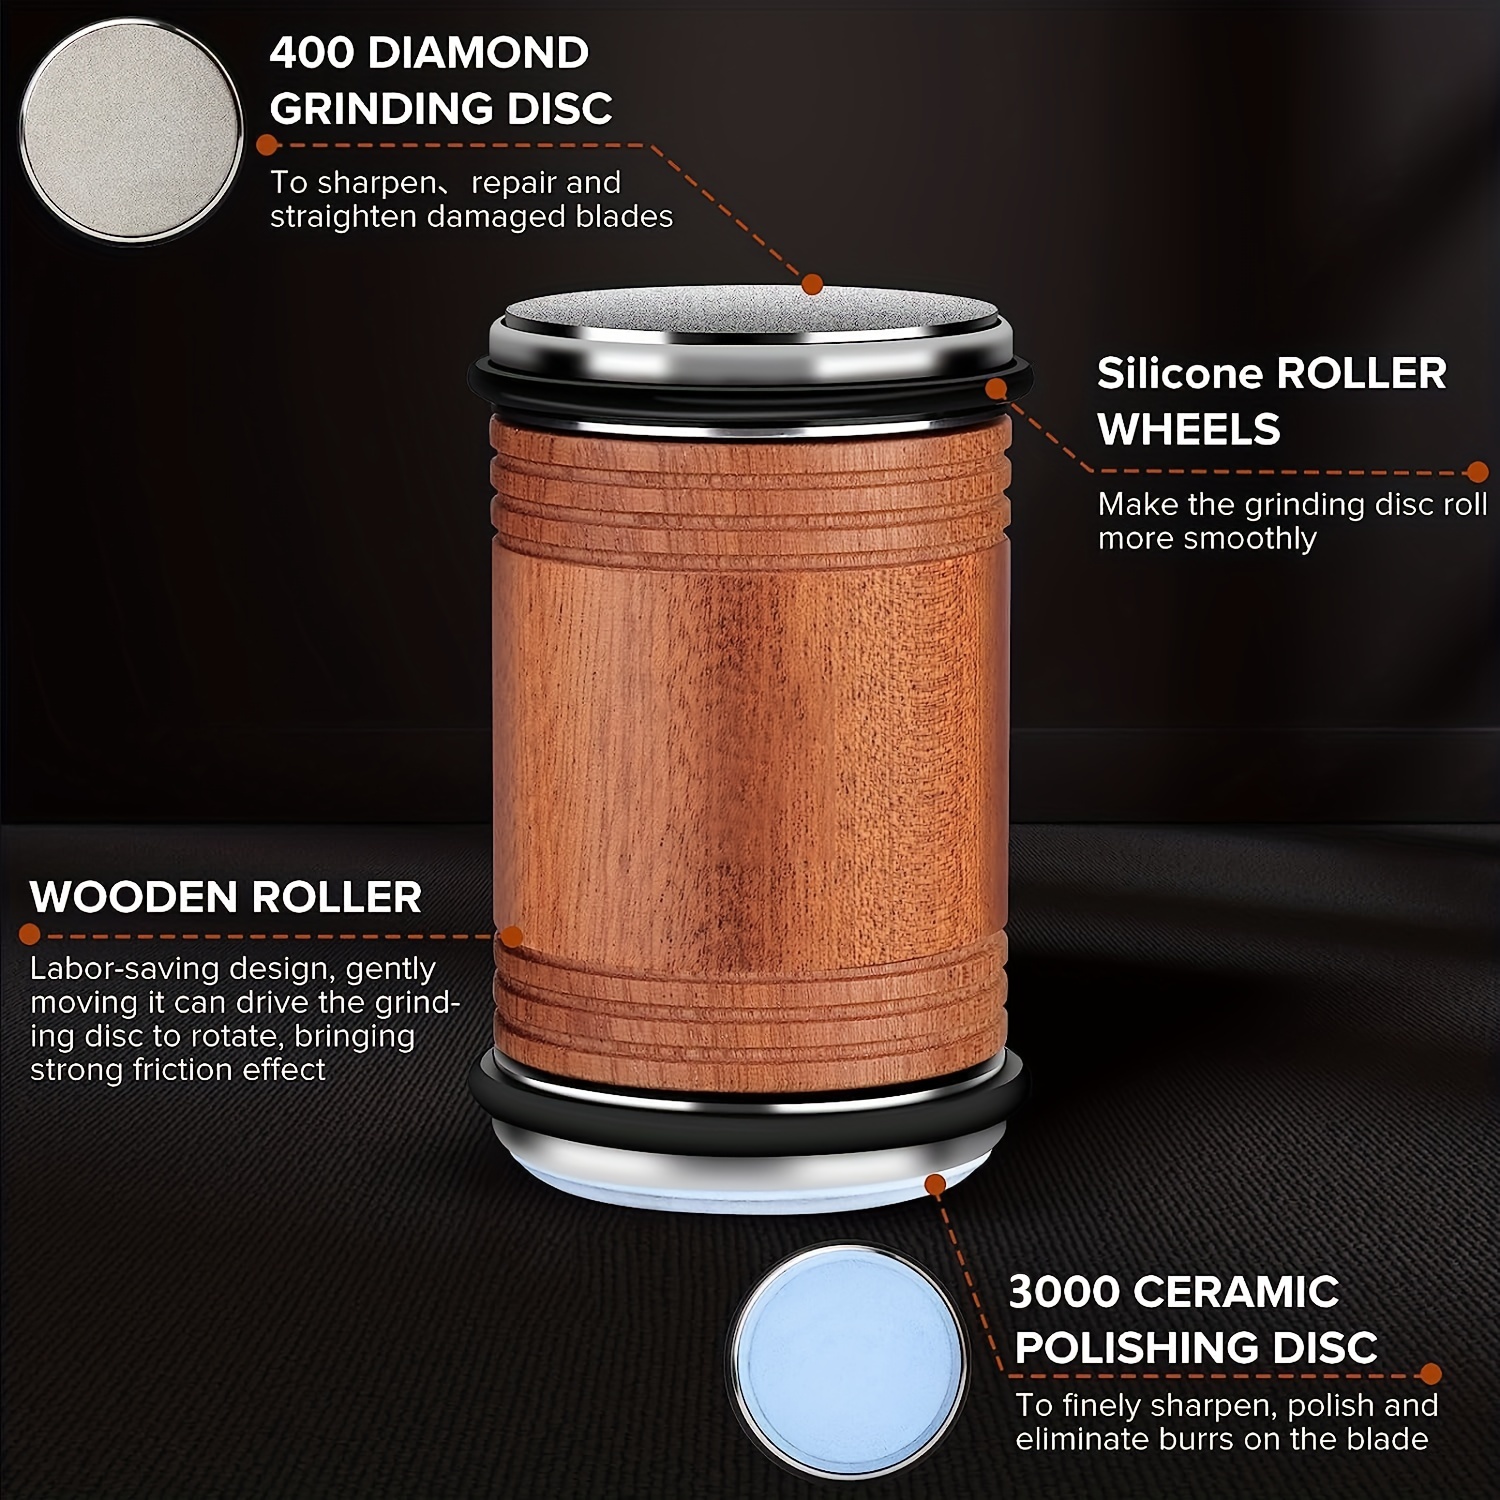  Rolling Knife Sharpener Kit with 4 Discs Diamond